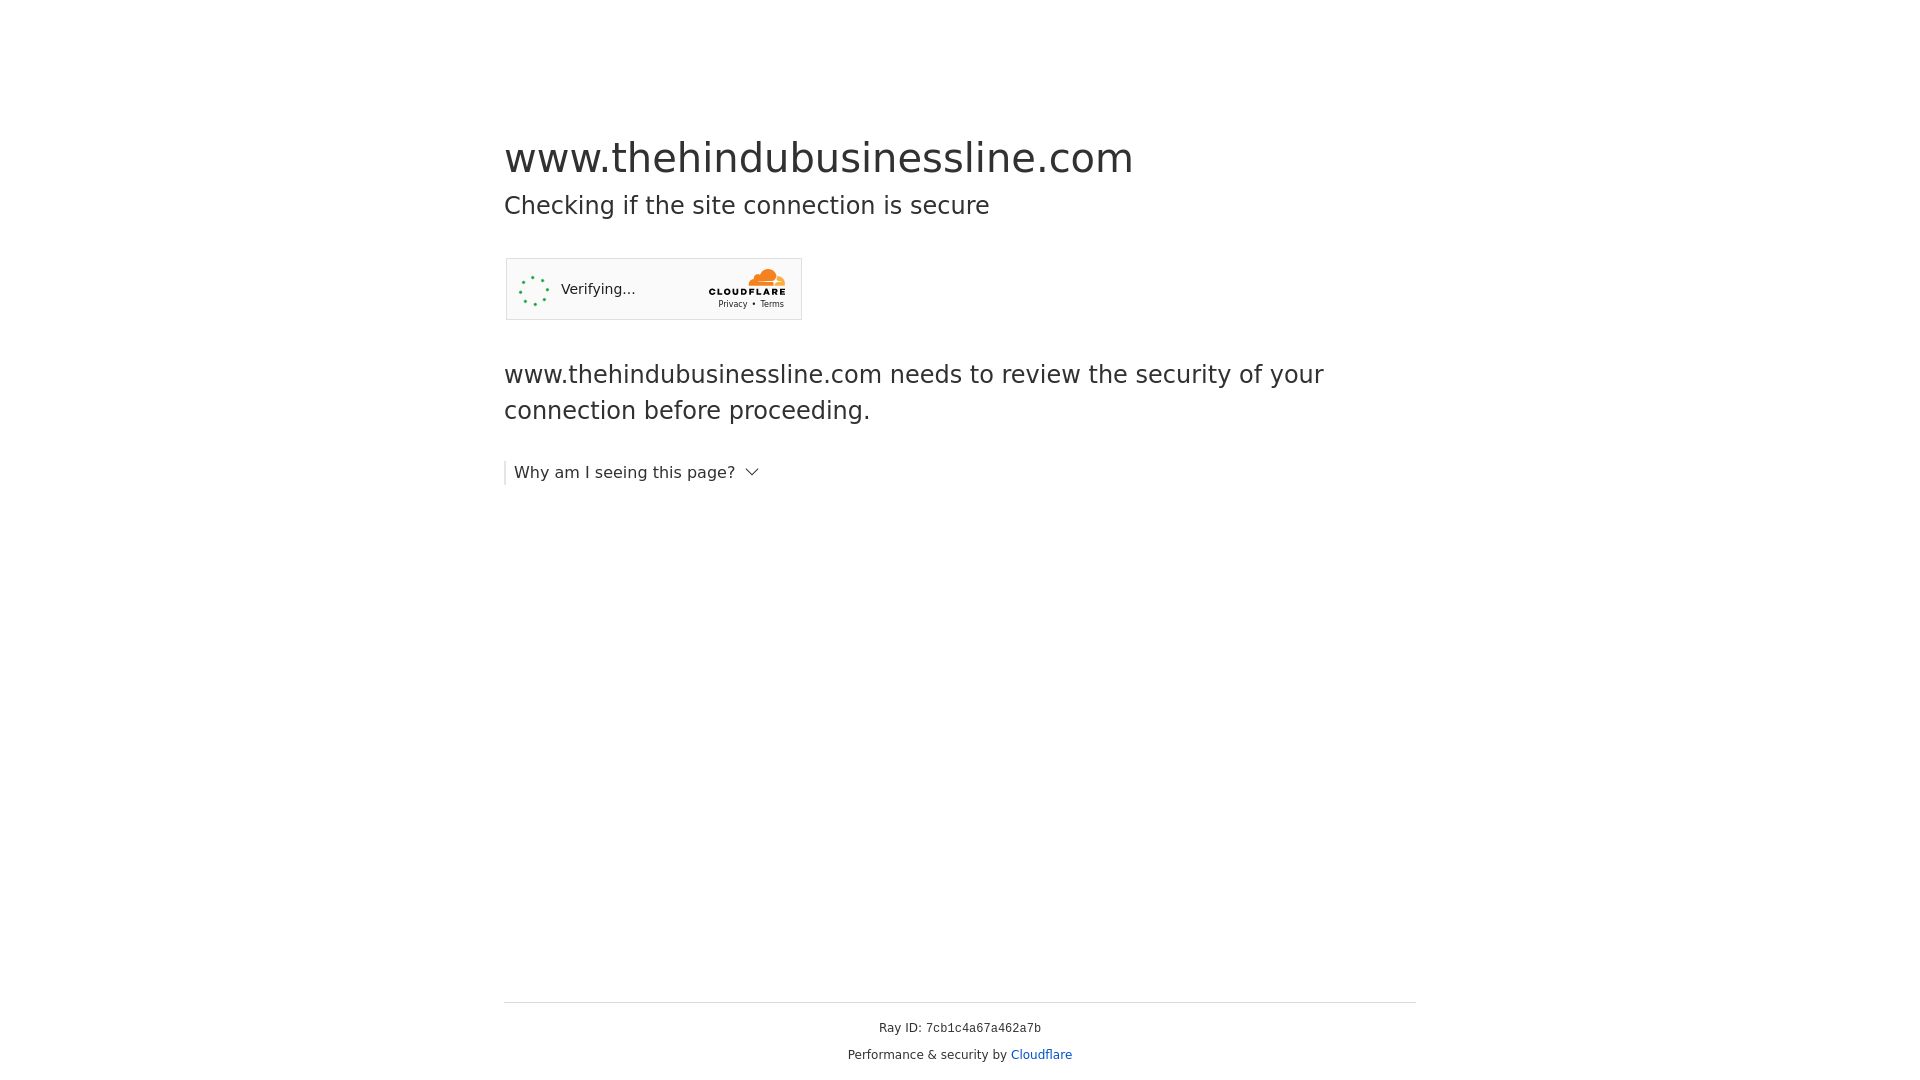 Webseitenstatus thehindubusinessline.com ist   ONLINE